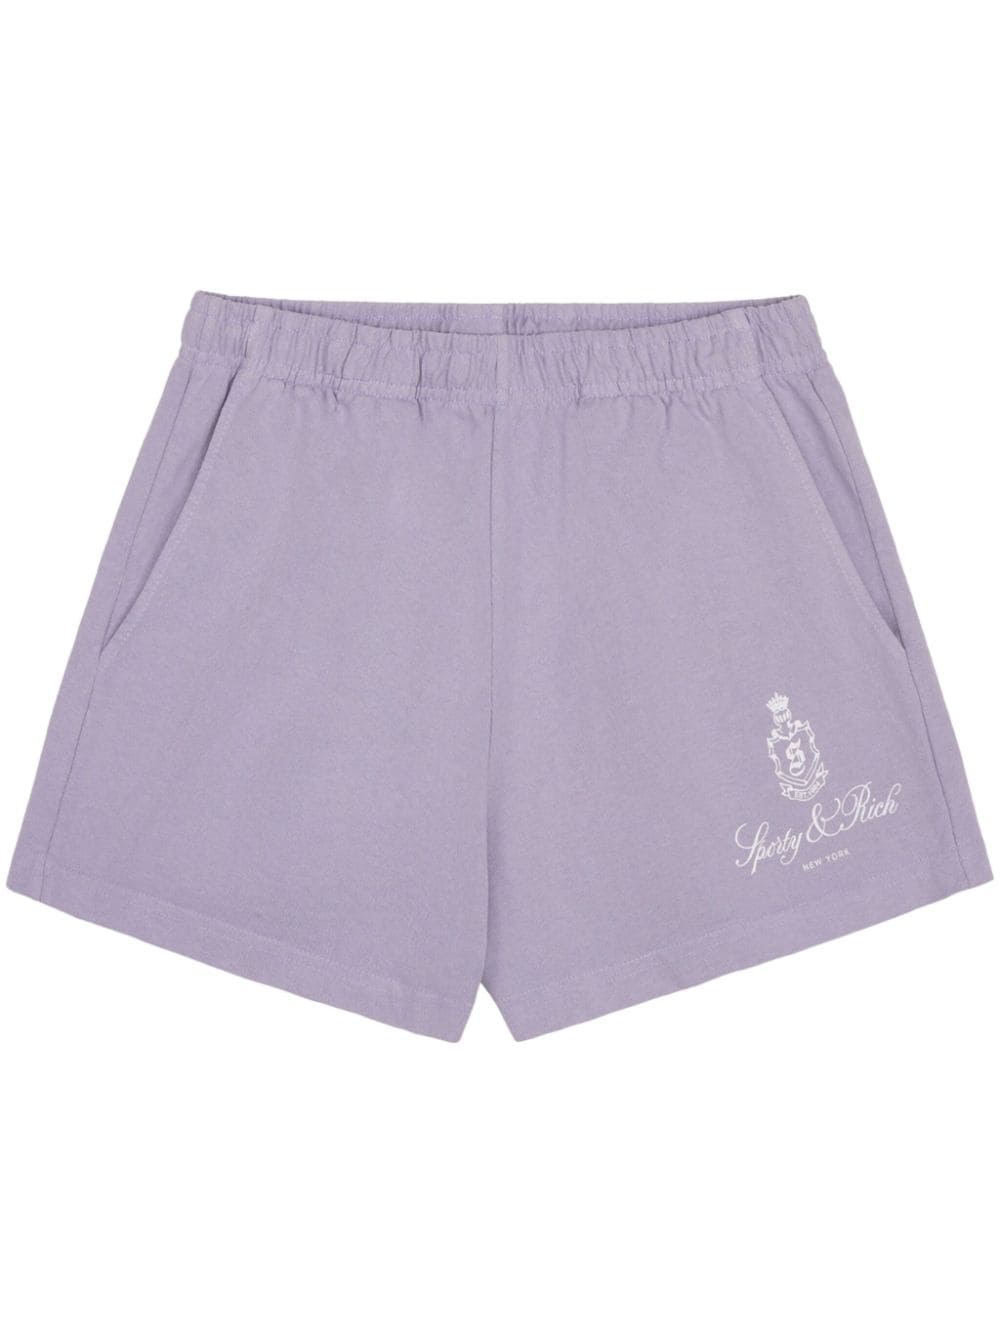 Sporty & Rich Vendome logo-embroidered shorts - Purple von Sporty & Rich